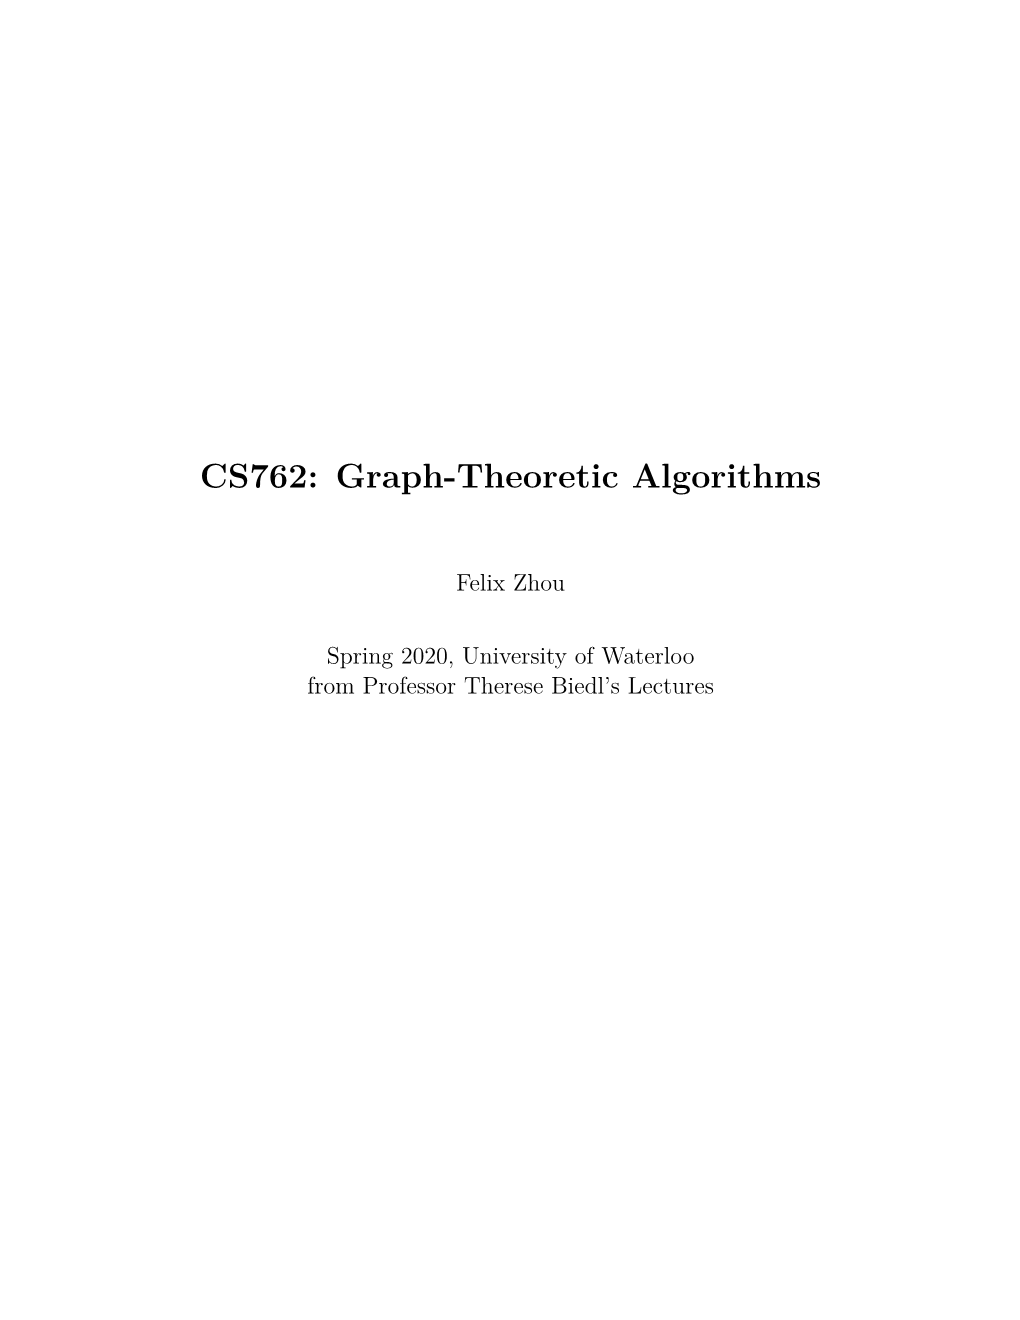 Graph-Theoretic Algorithms